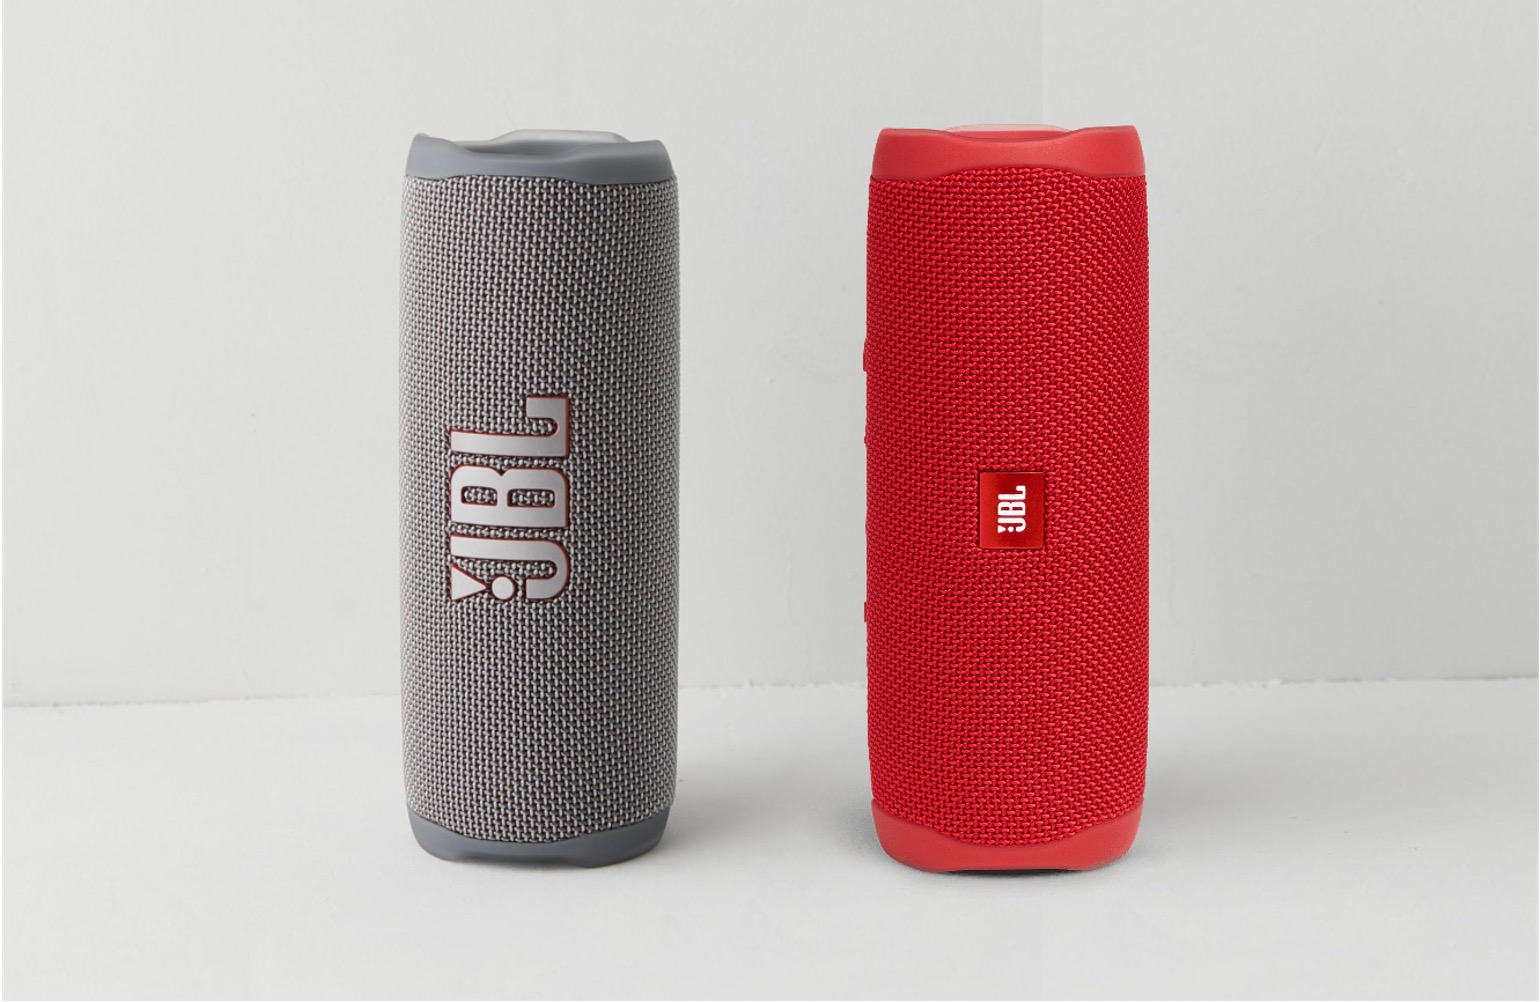 JBL Flip 5 Flip 6: Which is the better speaker?